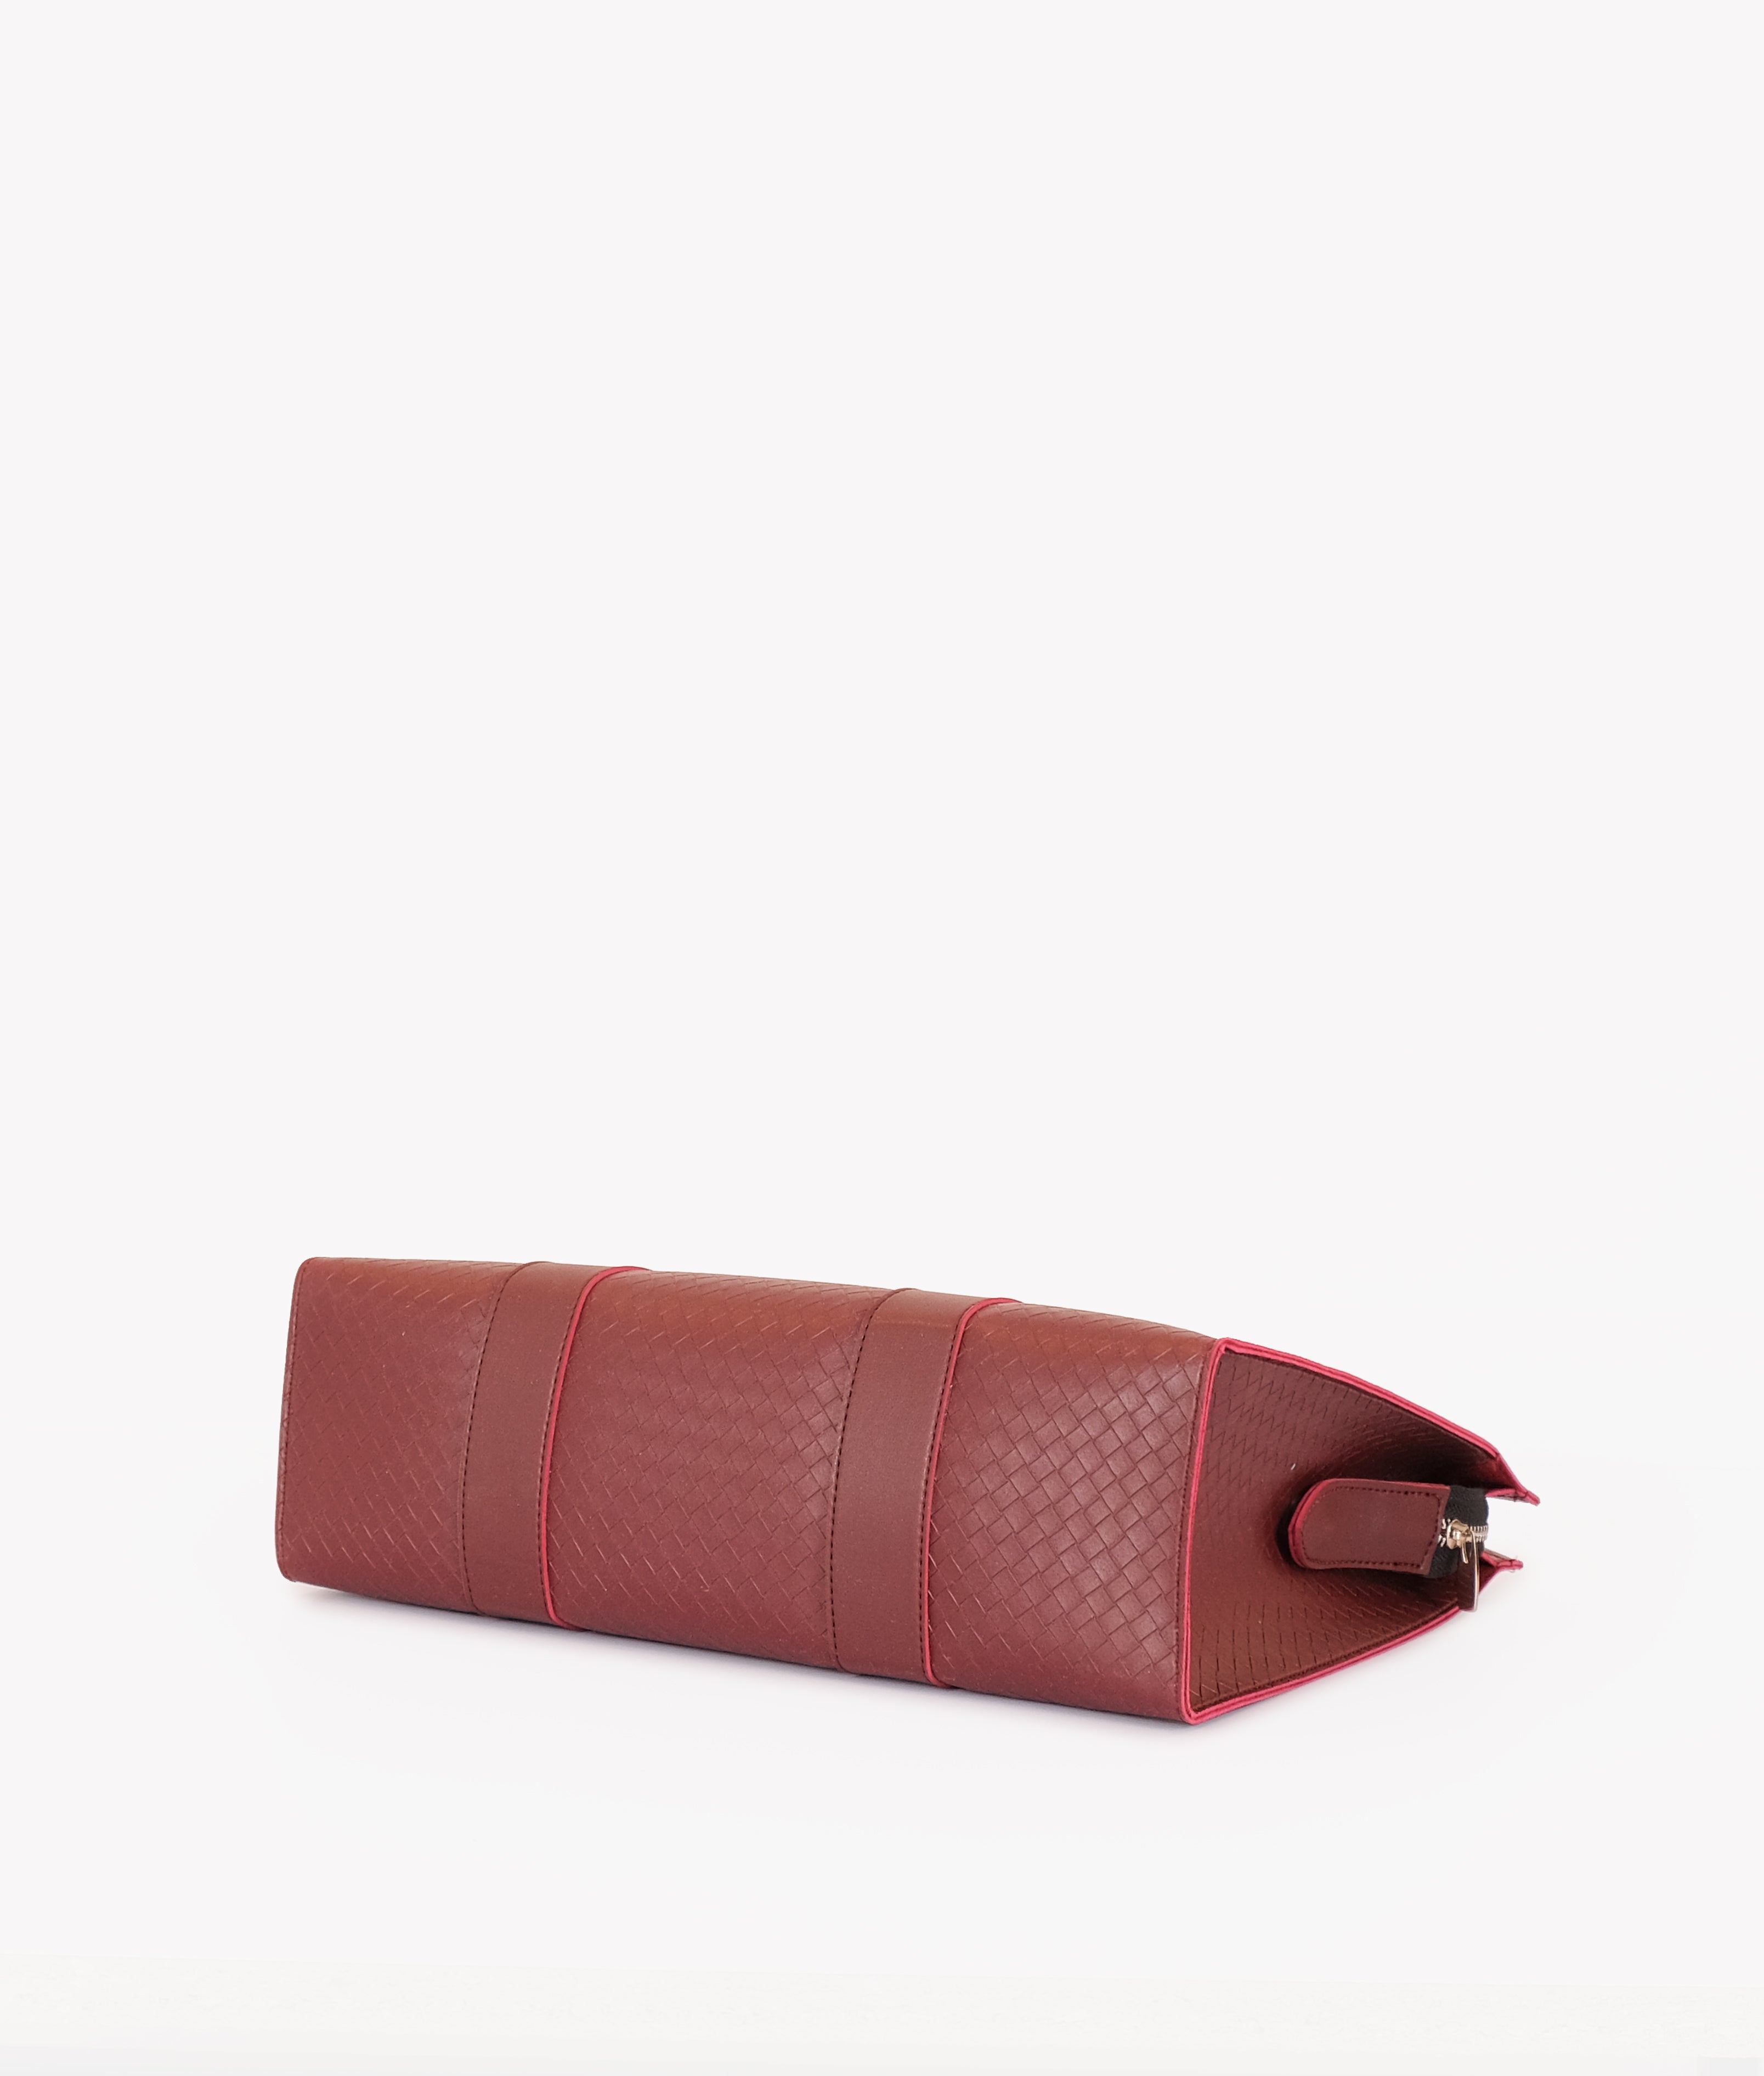 Burgundy weaved laptop bag with sleeve